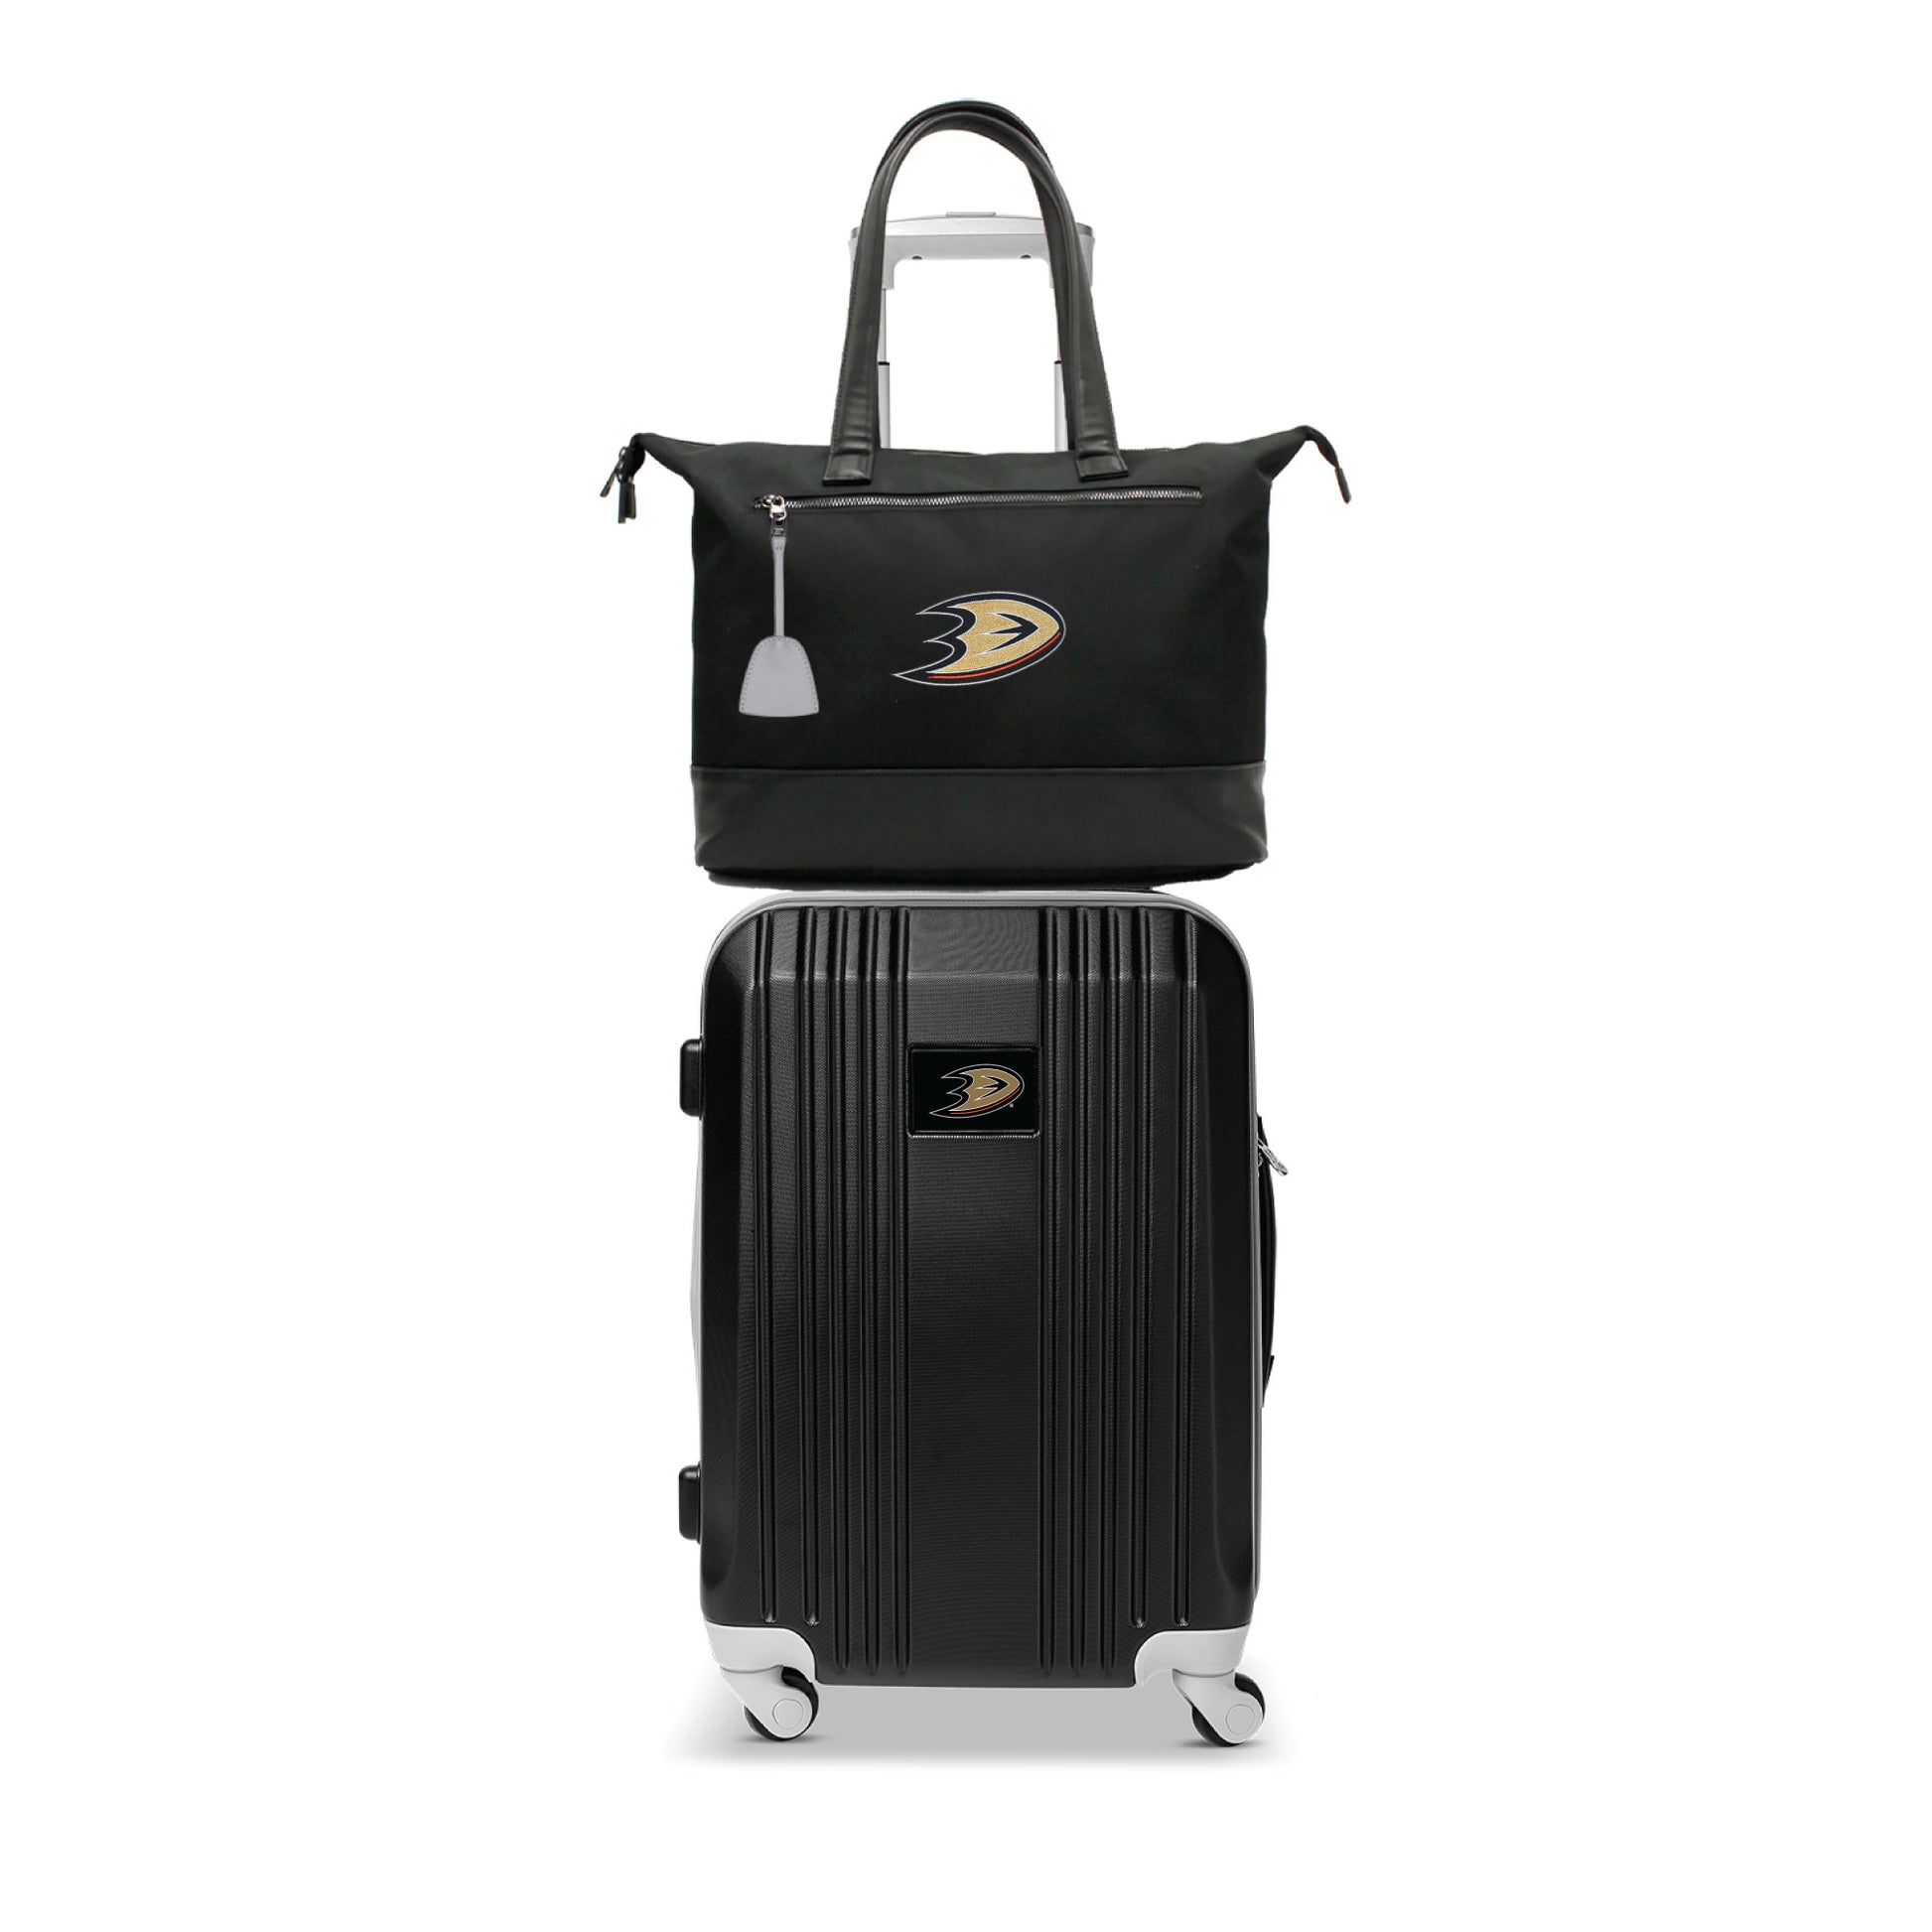 Anaheim Mighty Ducks Premium Laptop Tote Bag and Luggage Set